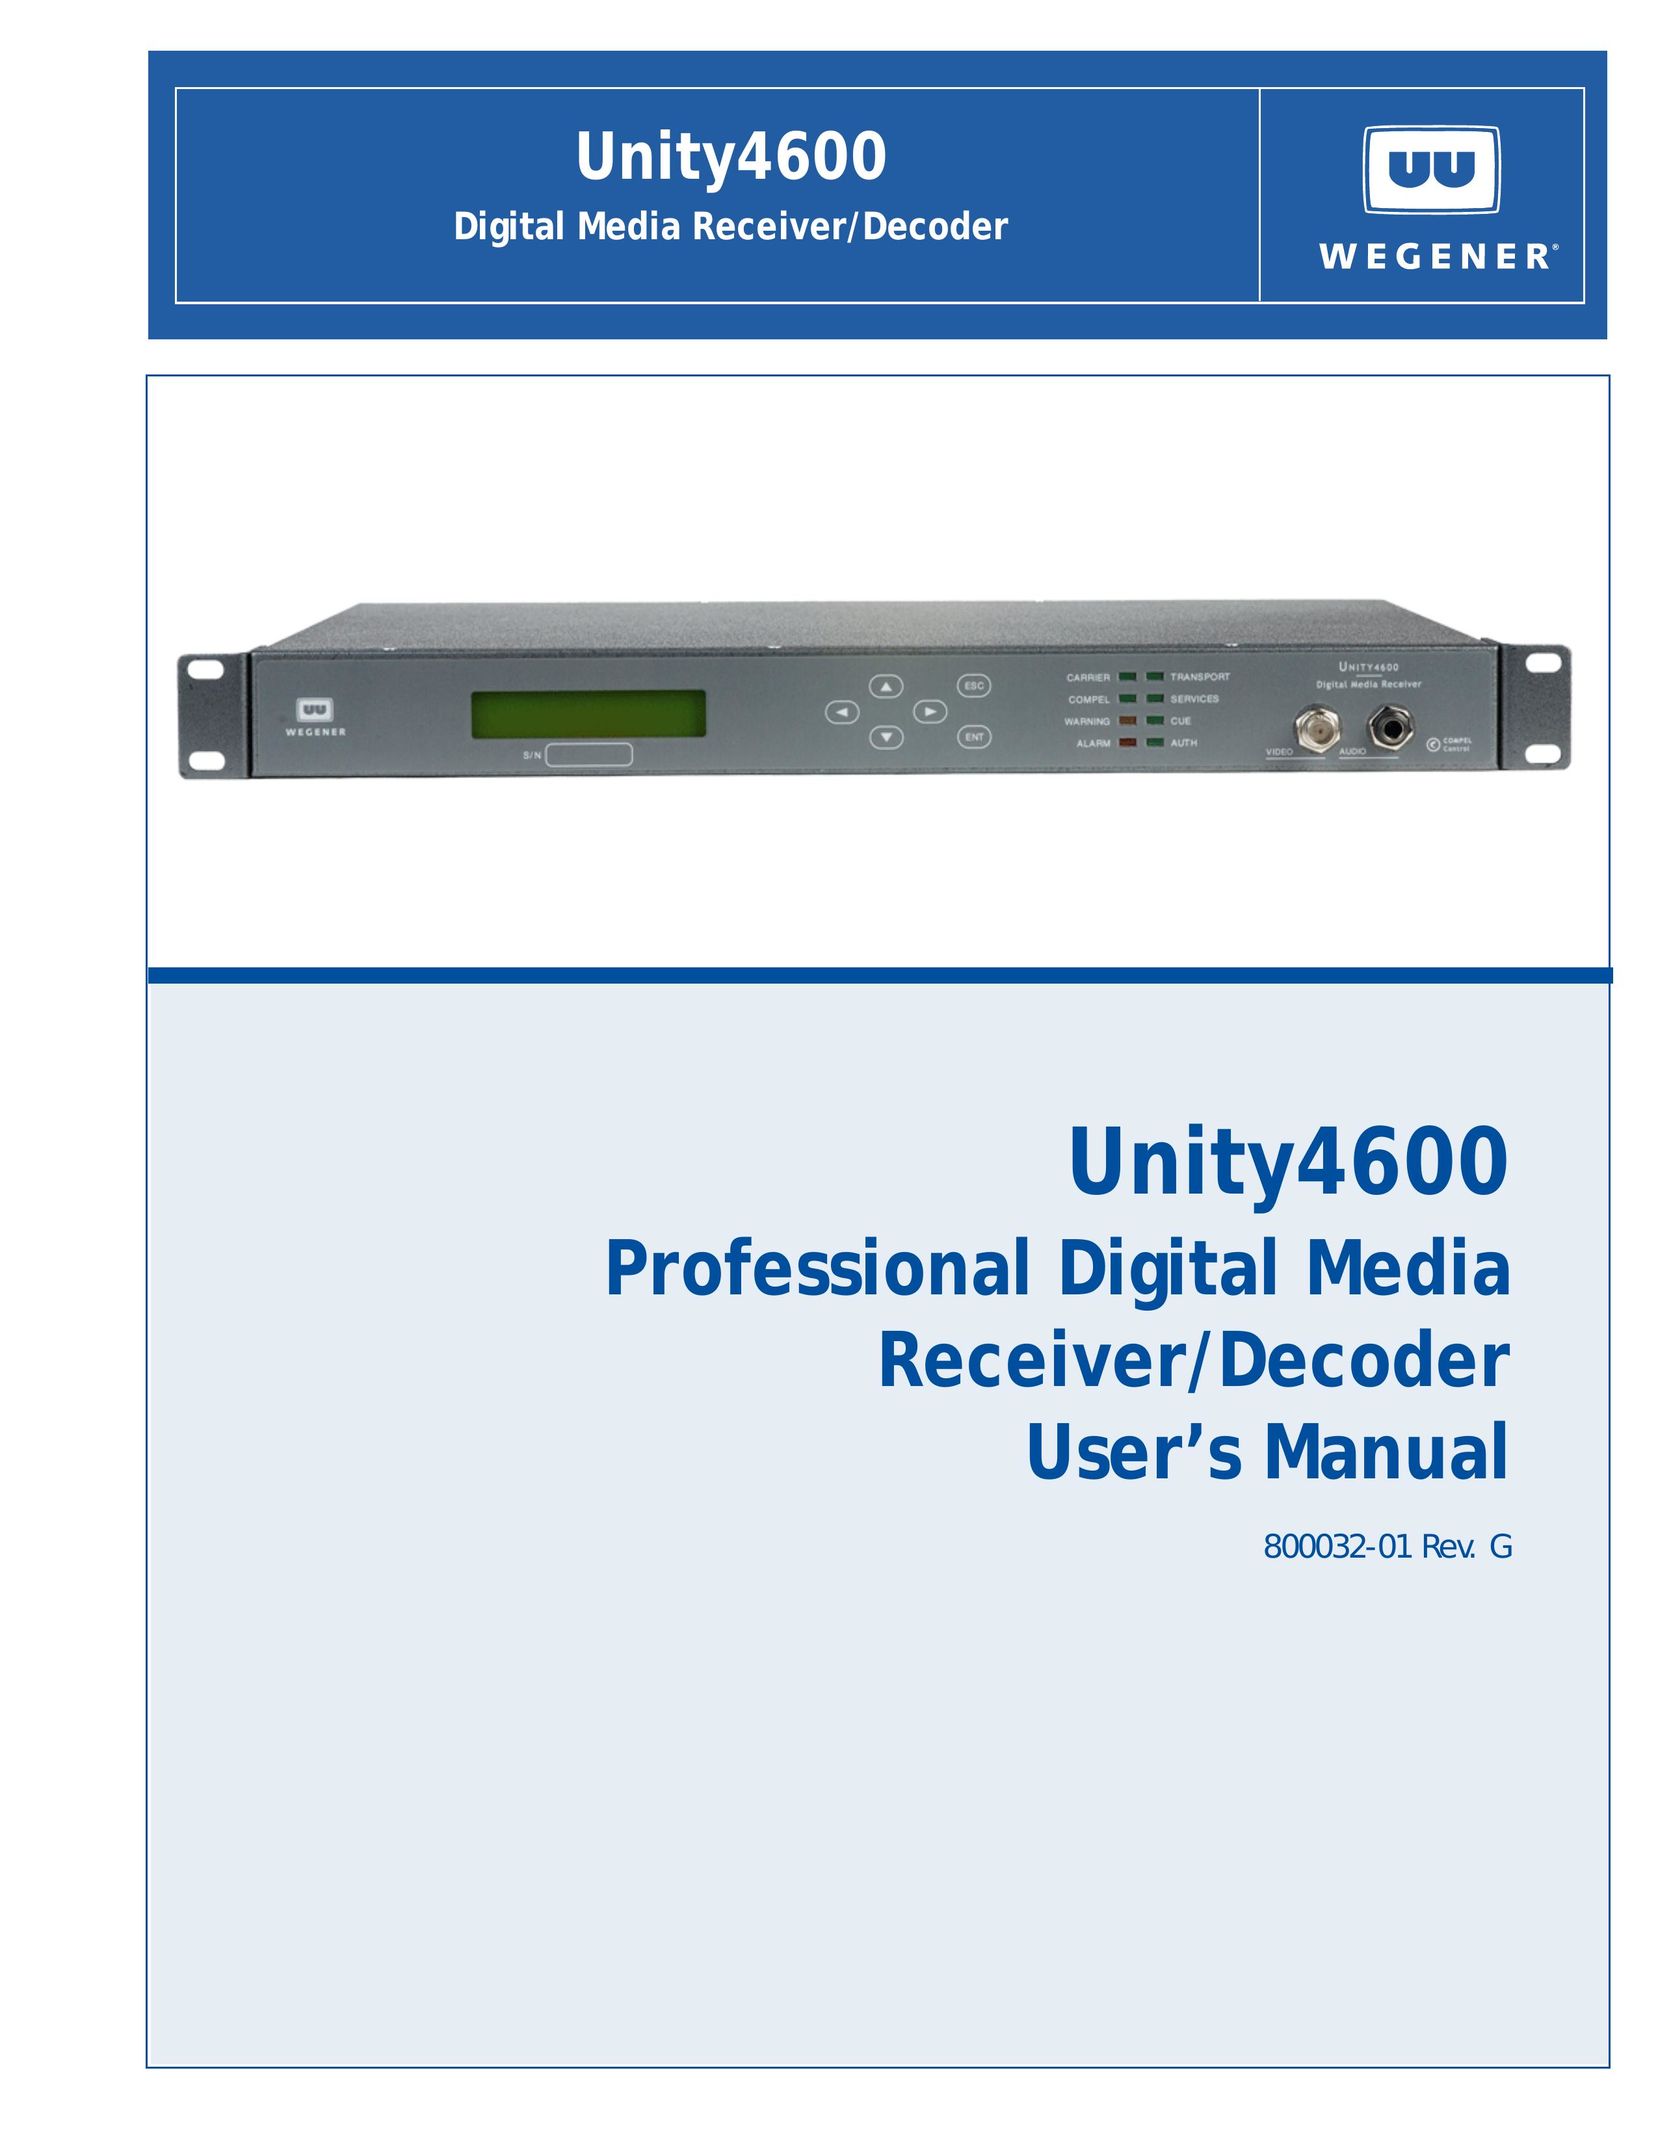 Wegener Communications 4600 Satellite TV System User Manual